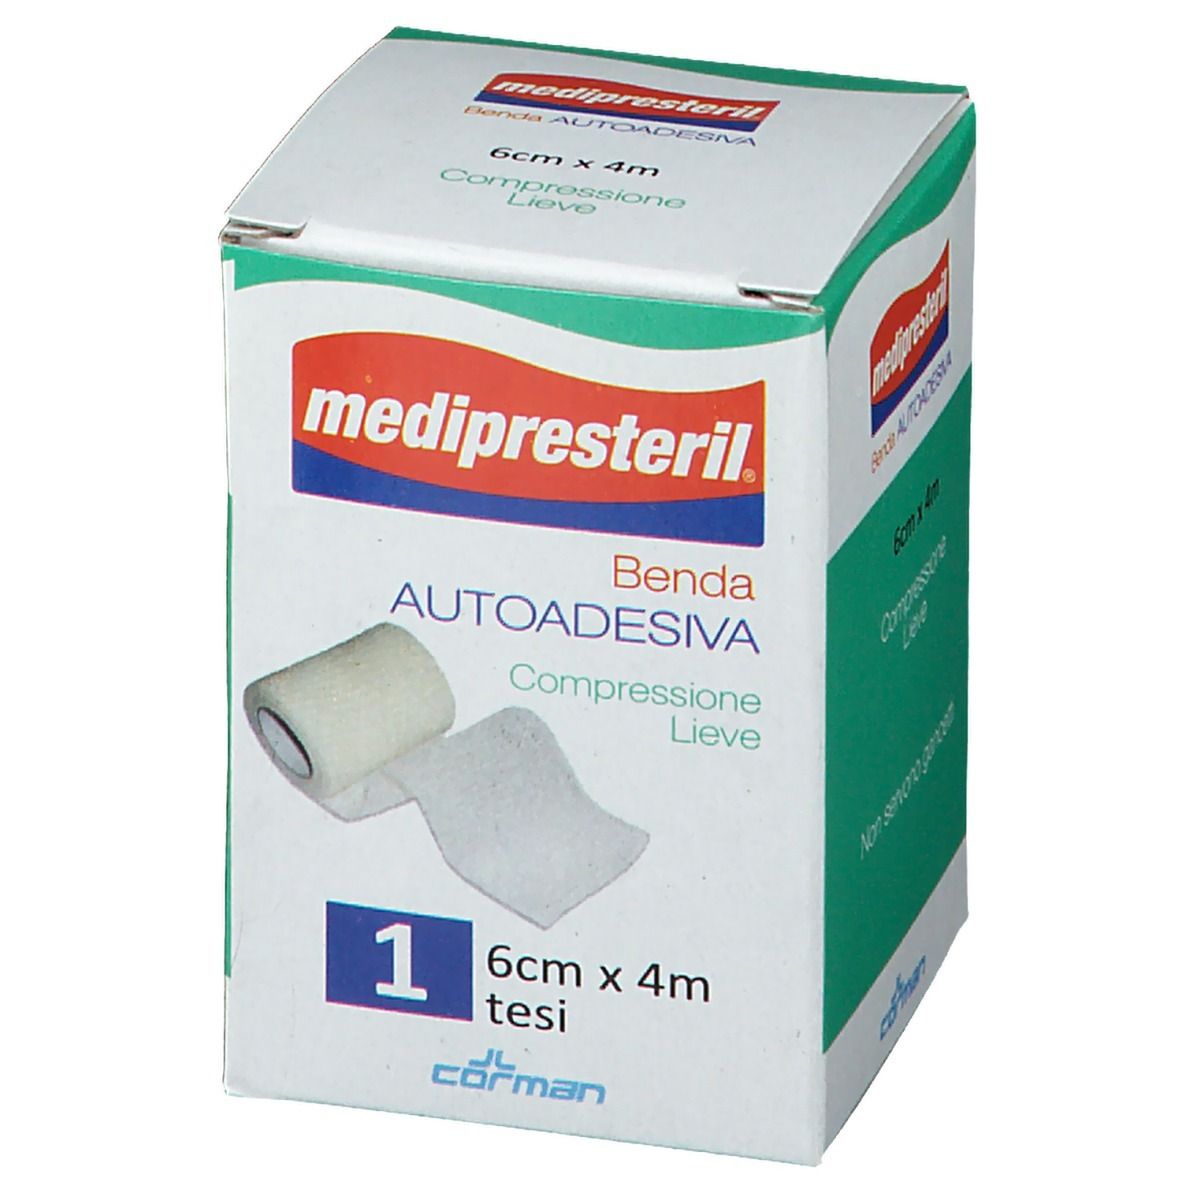 MediPresteril® Benda Autoadesiva Compressione Lieve 6 x 4 m